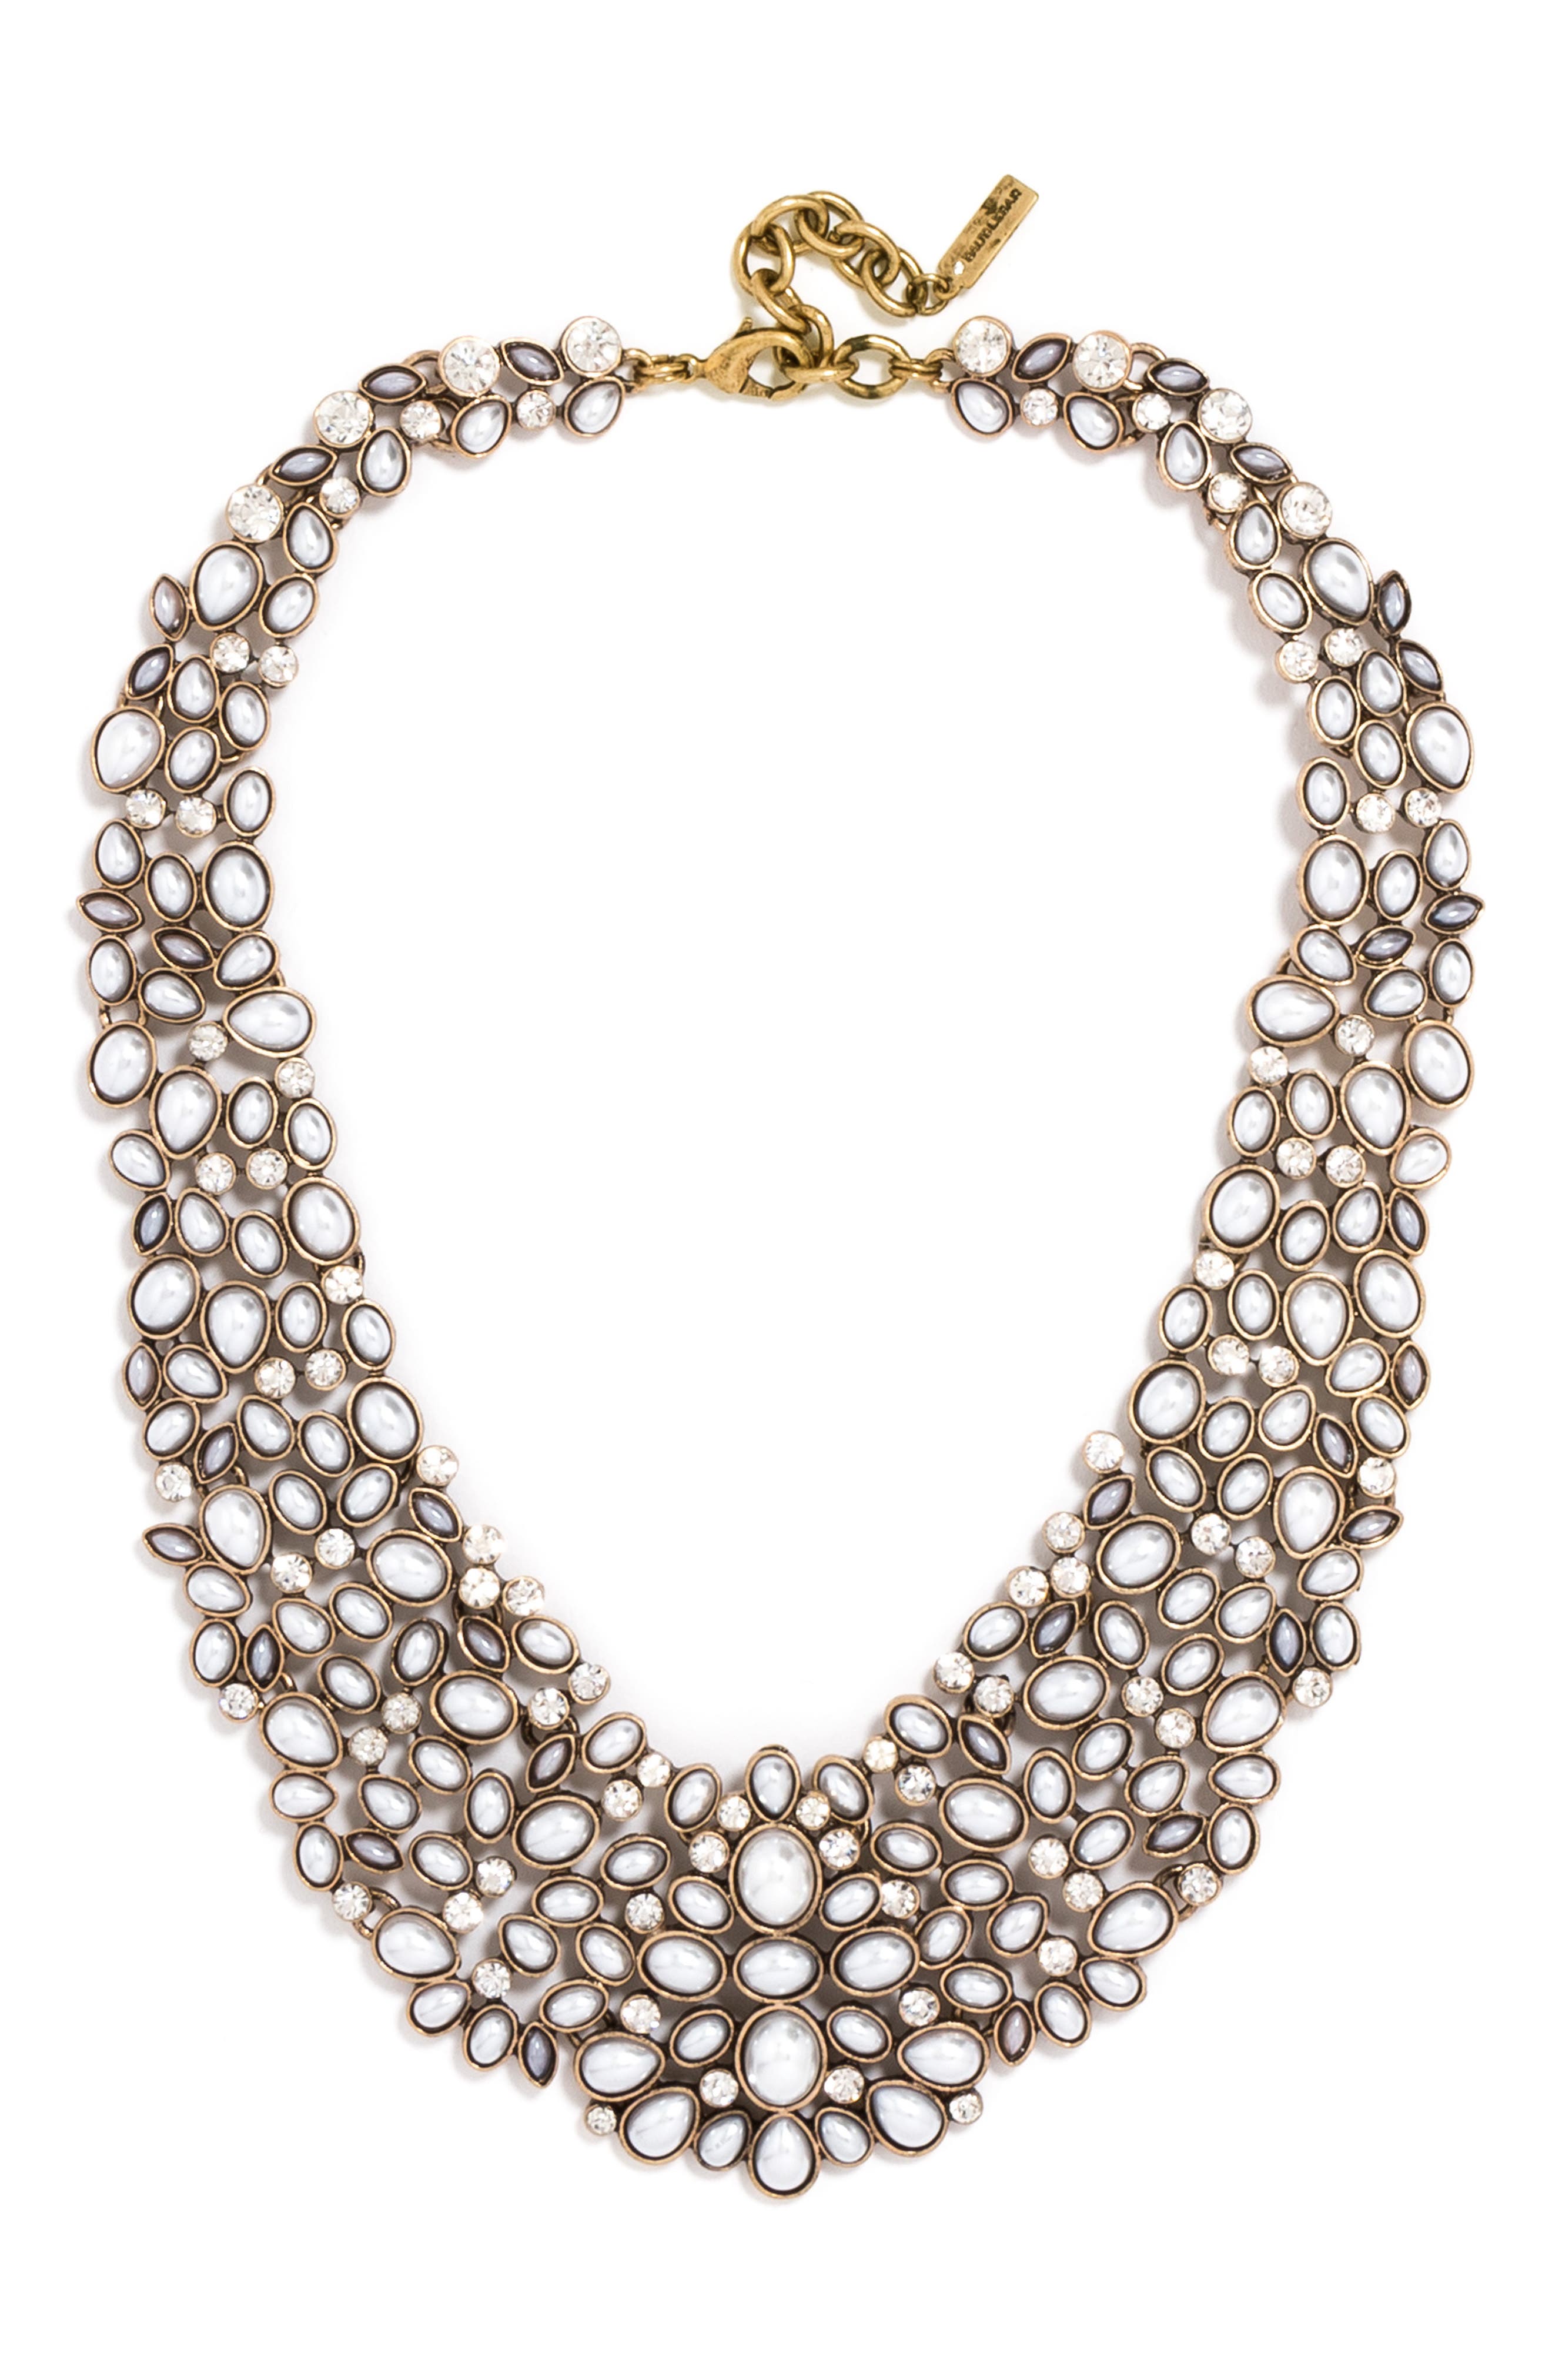 Link Silver Choker Necklace Collar Women Pendant Fashion Statement Jewelry